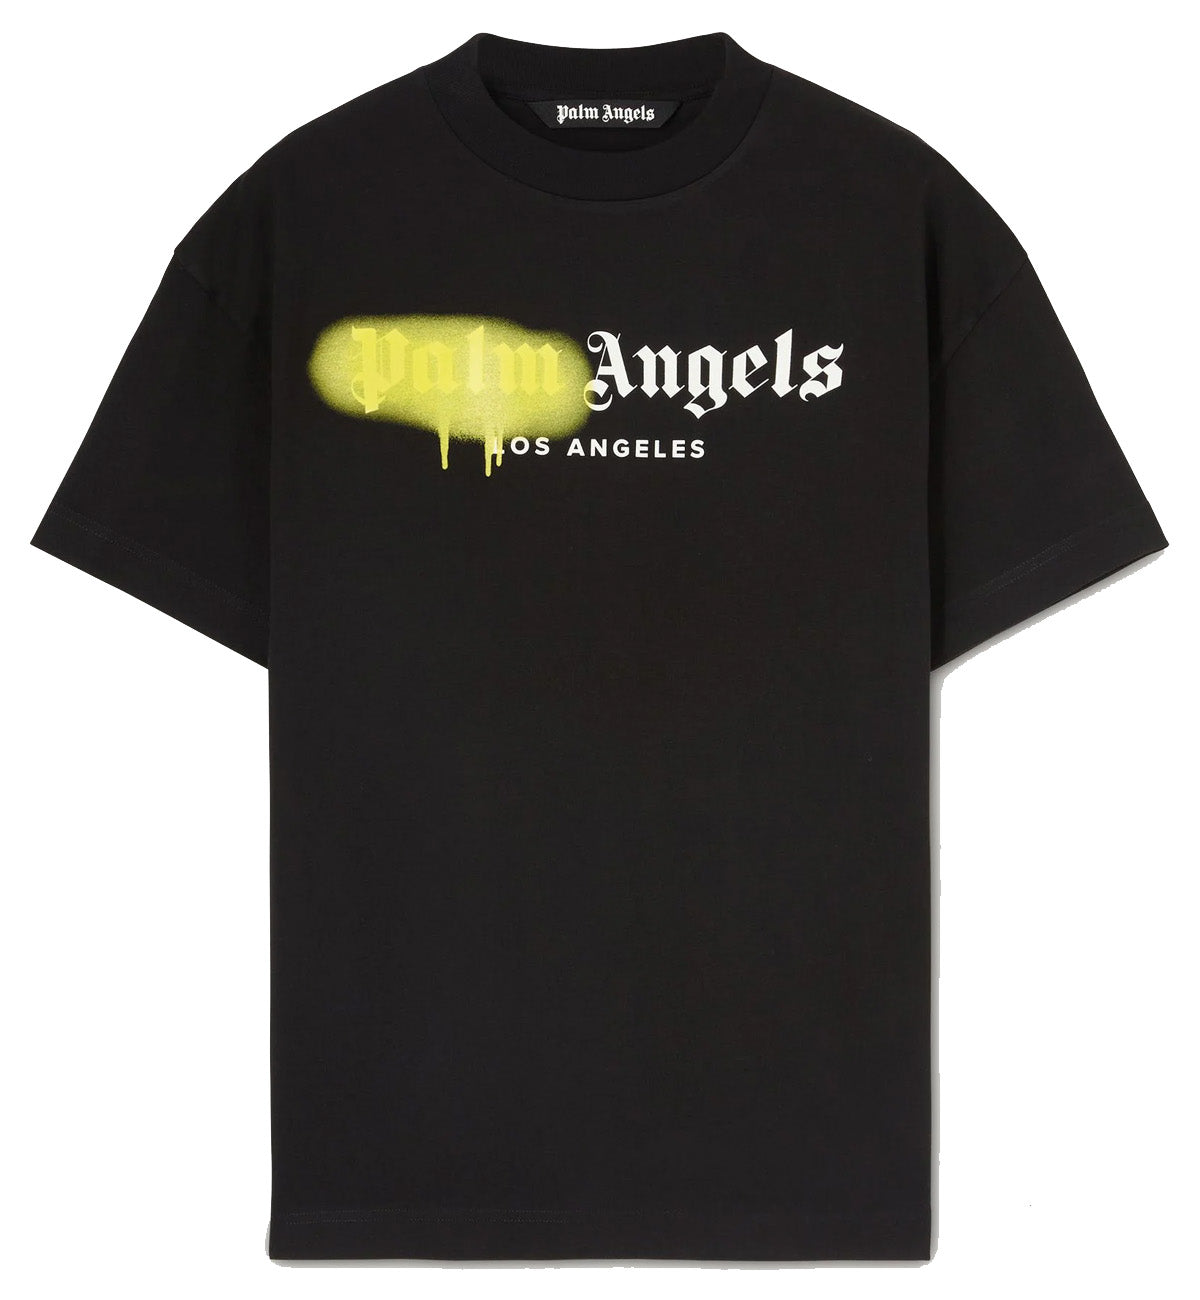 Palm Angels Los Angeles Sprayed T-Shirt (Black)